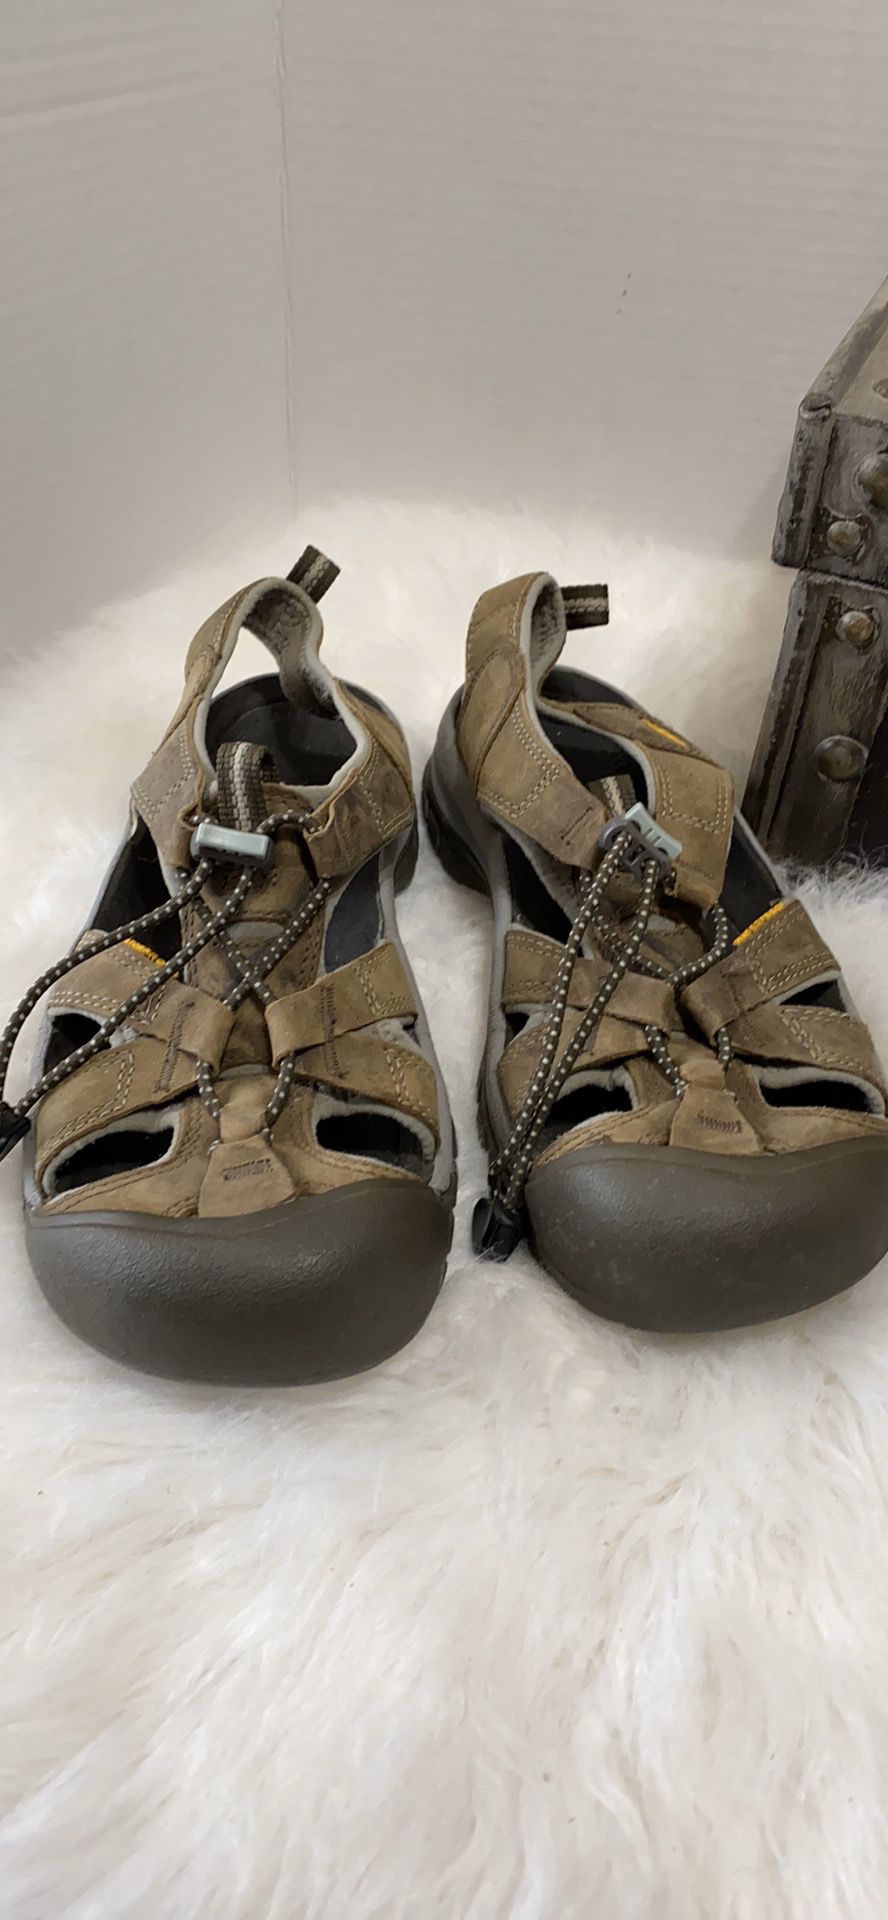 KEEN women’s brown leather Sandals sz 7.5